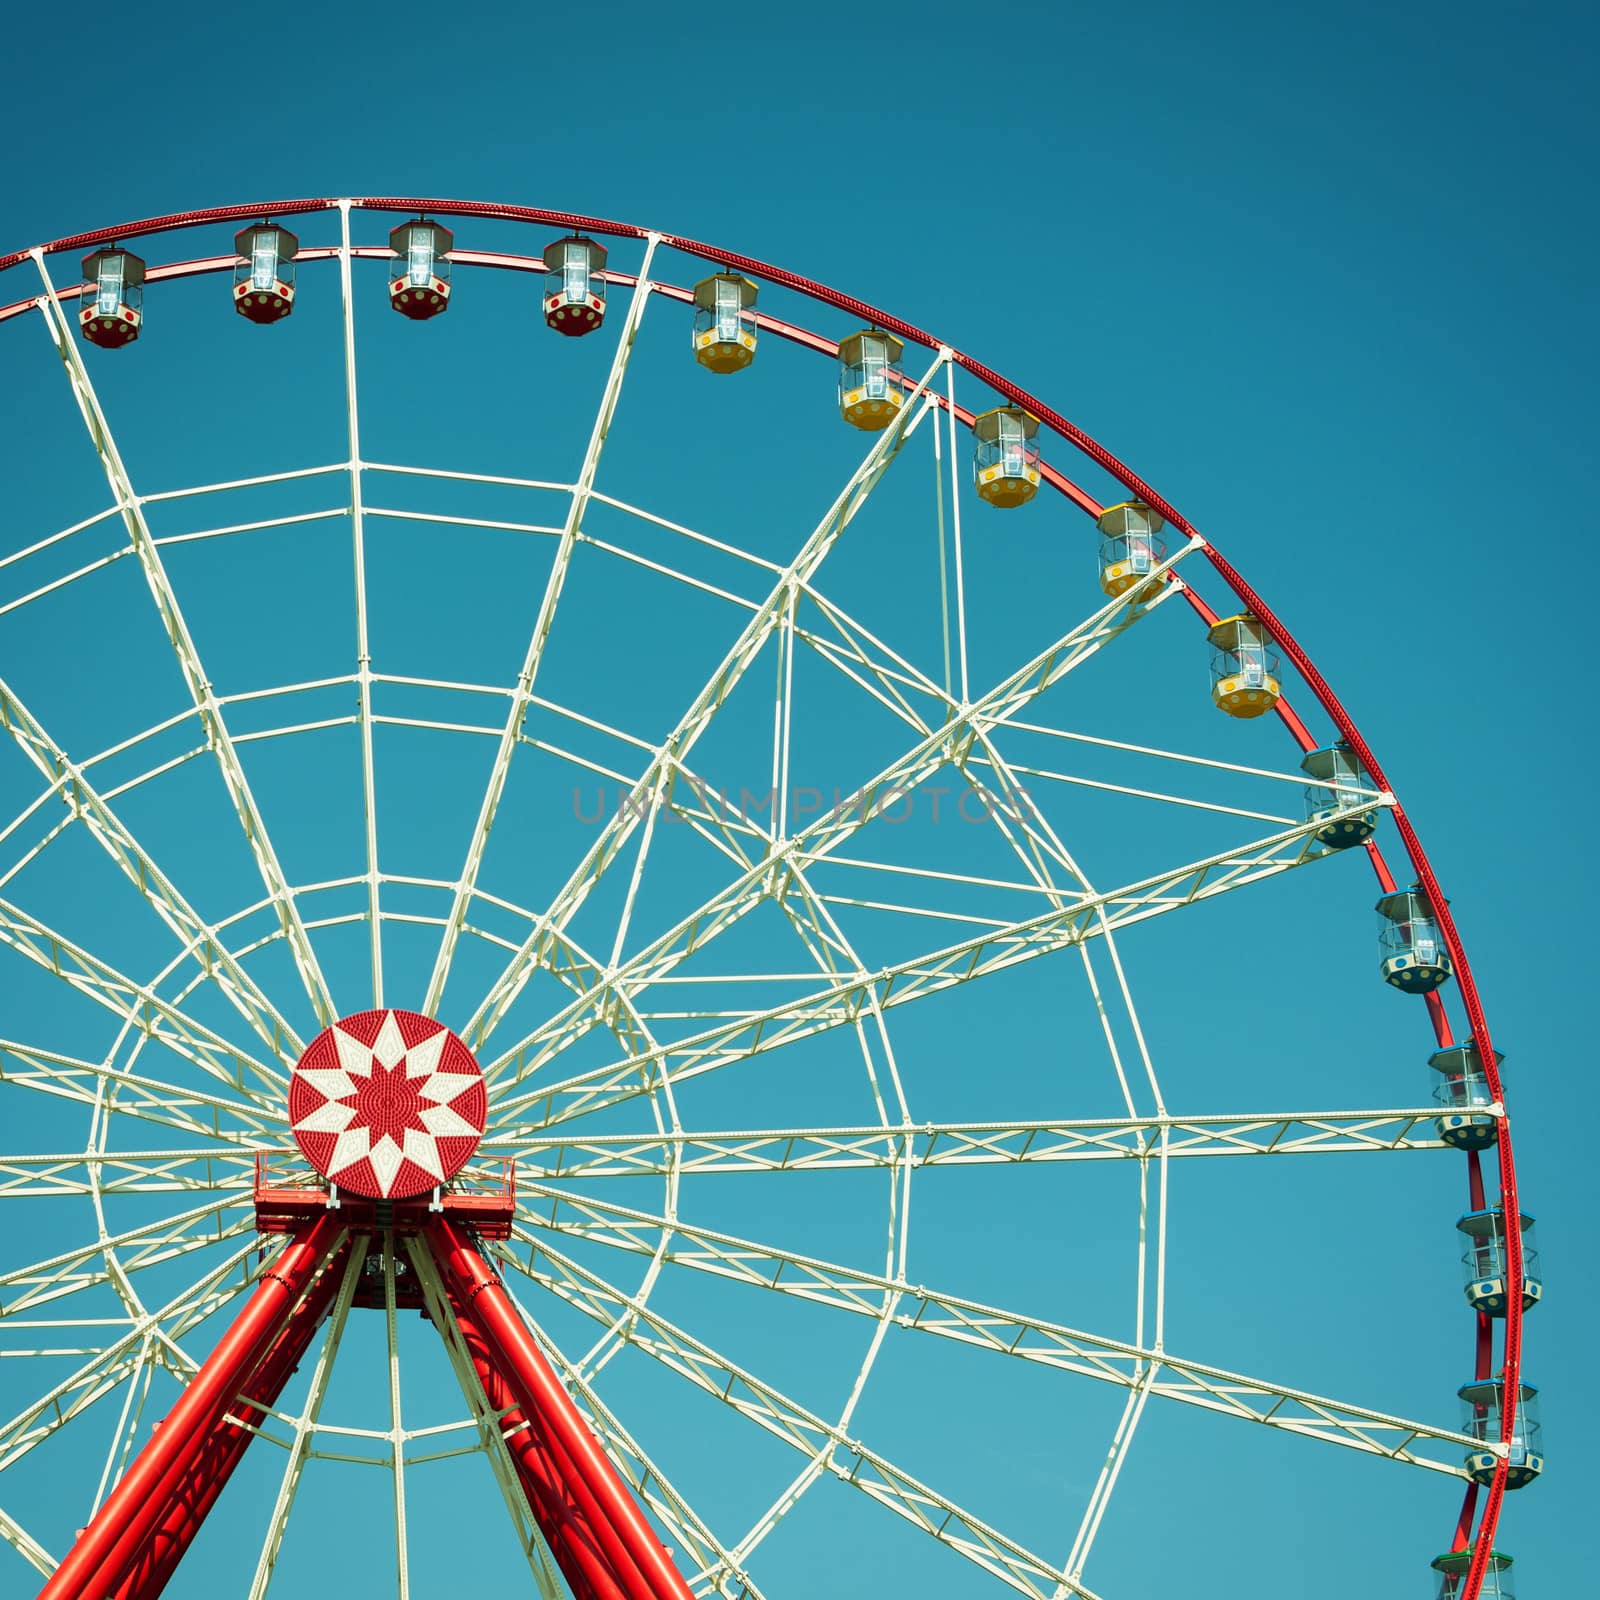 Ferris wheel attraction on blue sky background.